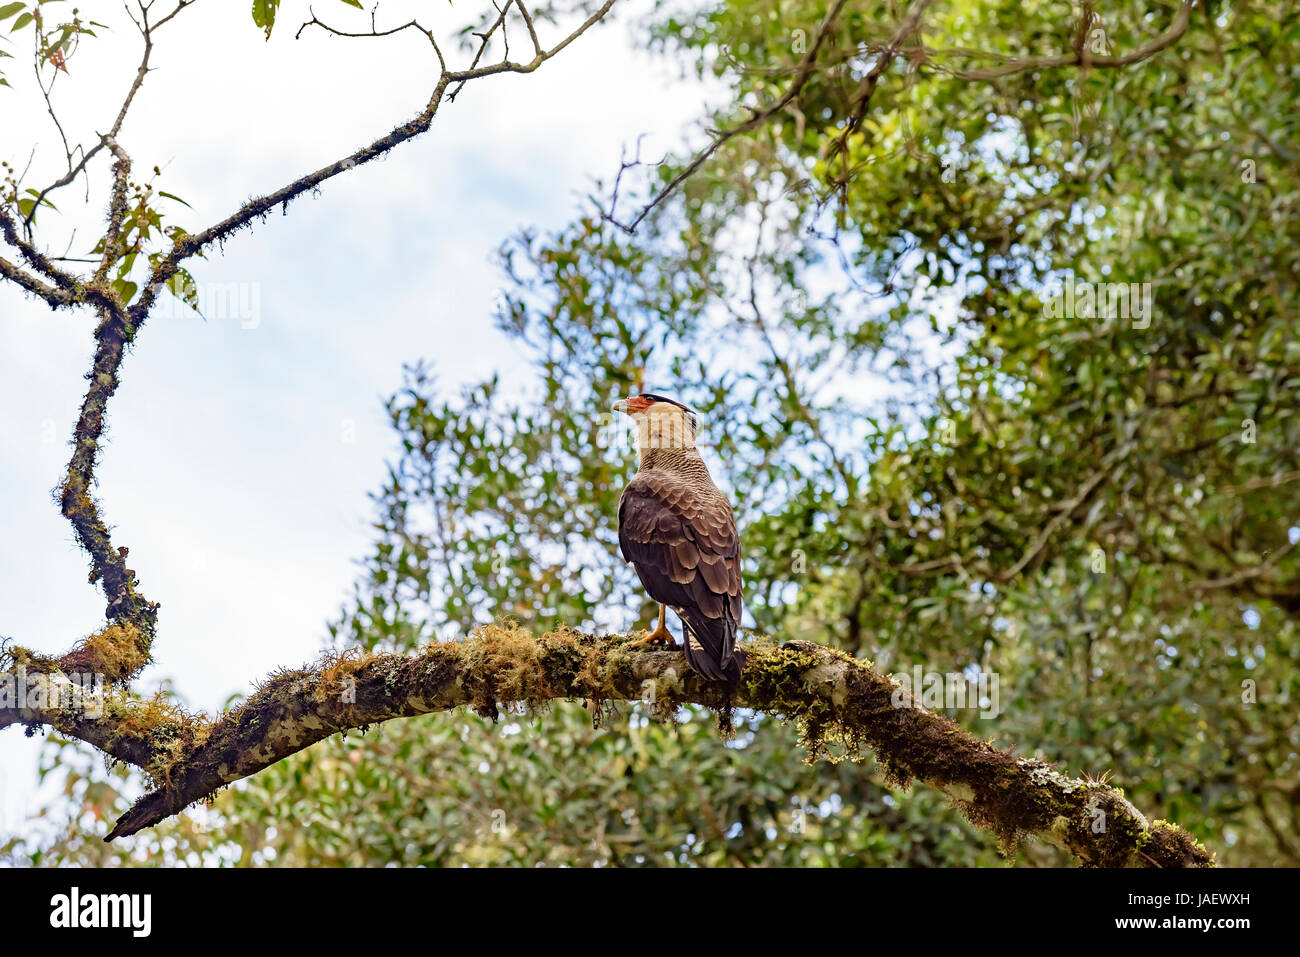 Carcara Perched on the branch of a tree in the Itatiaia National Park, Rio de Janeiro Stock Photo